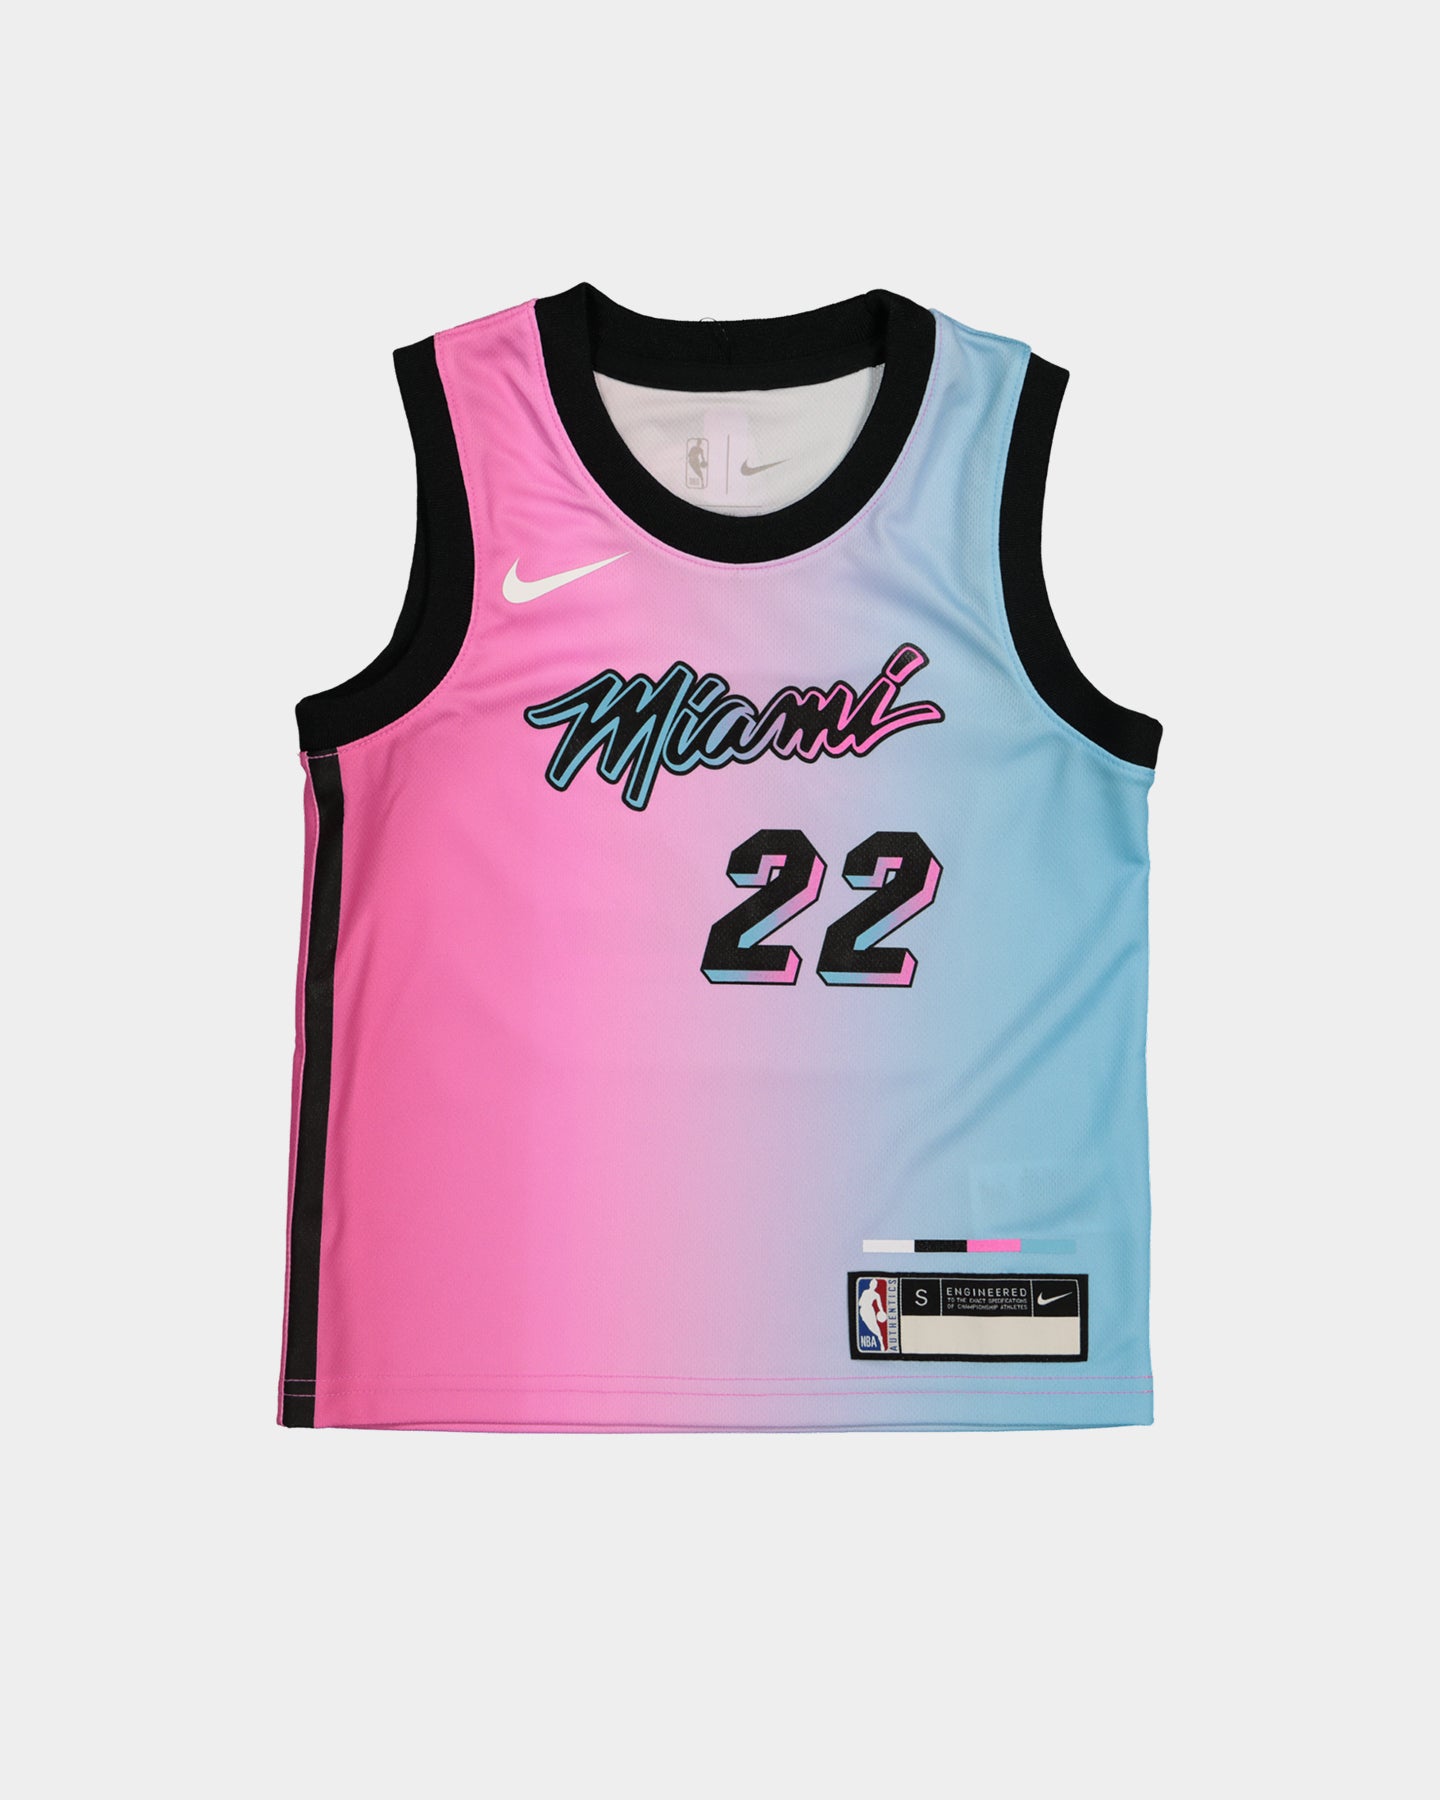 miami basketball jersey pink